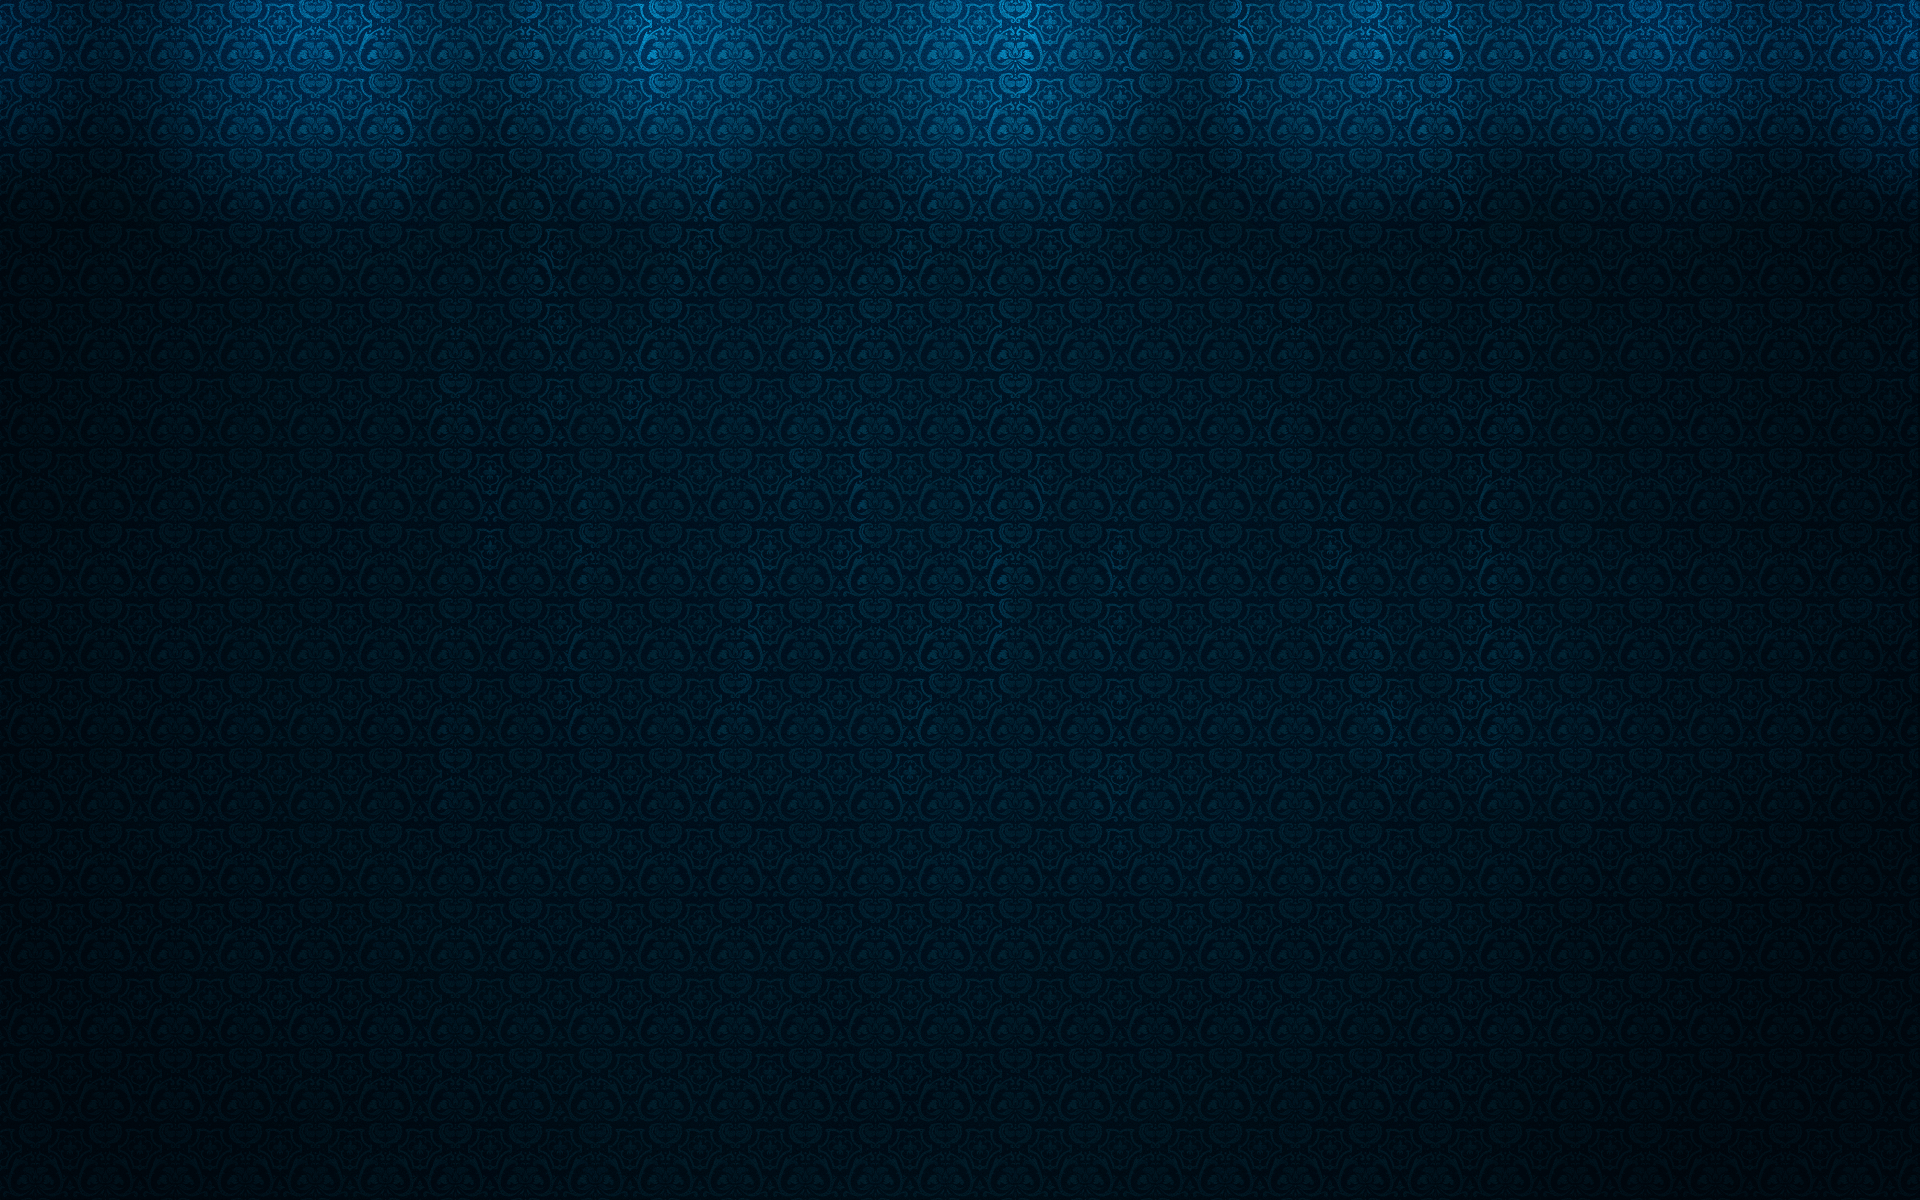 Dark Blue Computer Wallpapers - Top Free Dark Blue Computer Backgrounds ...